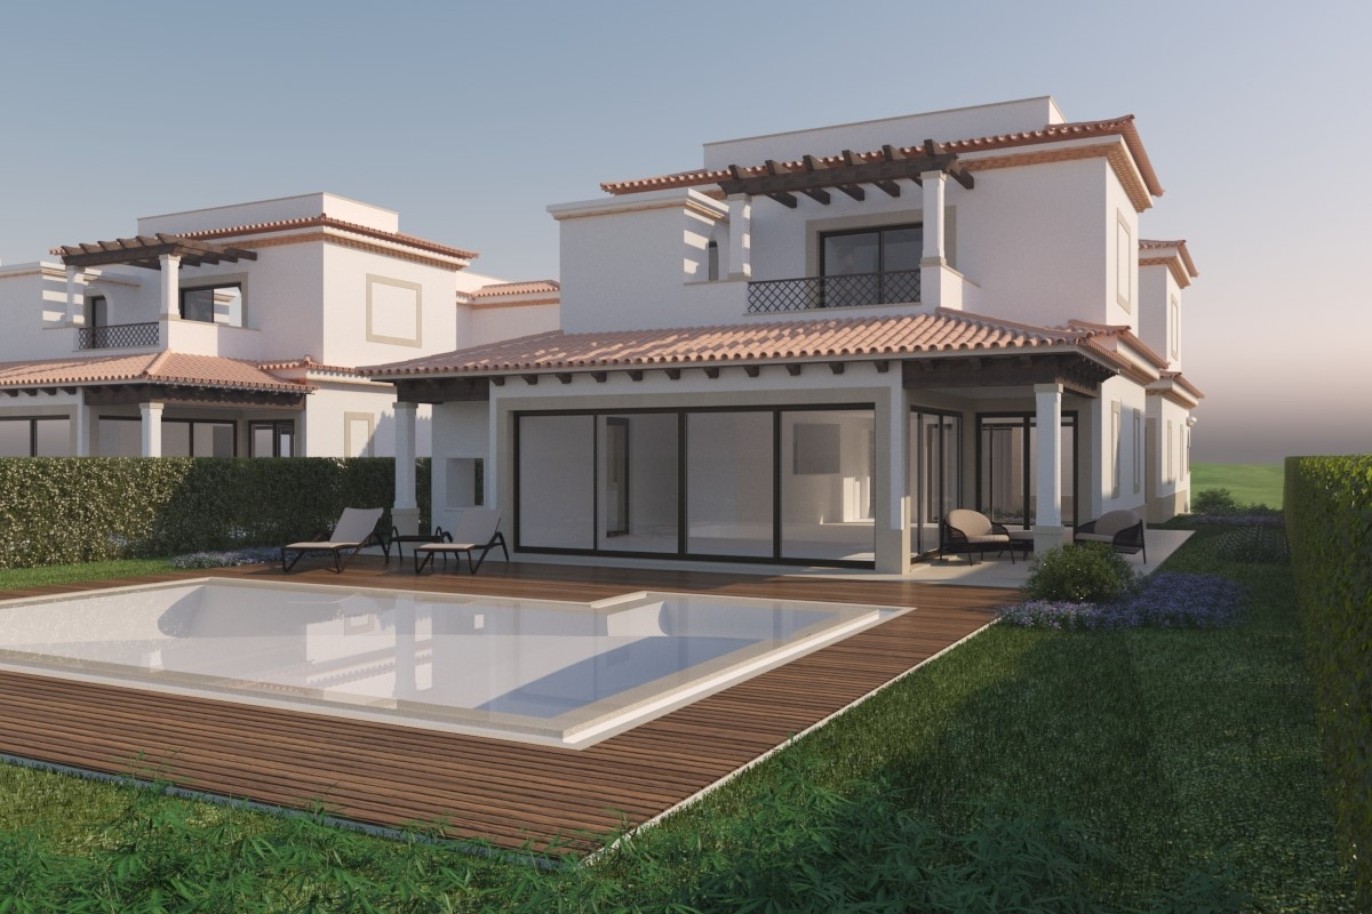 4 Bedroom Luxury Villa with pool for sale in Albufeira, Algarve_227983